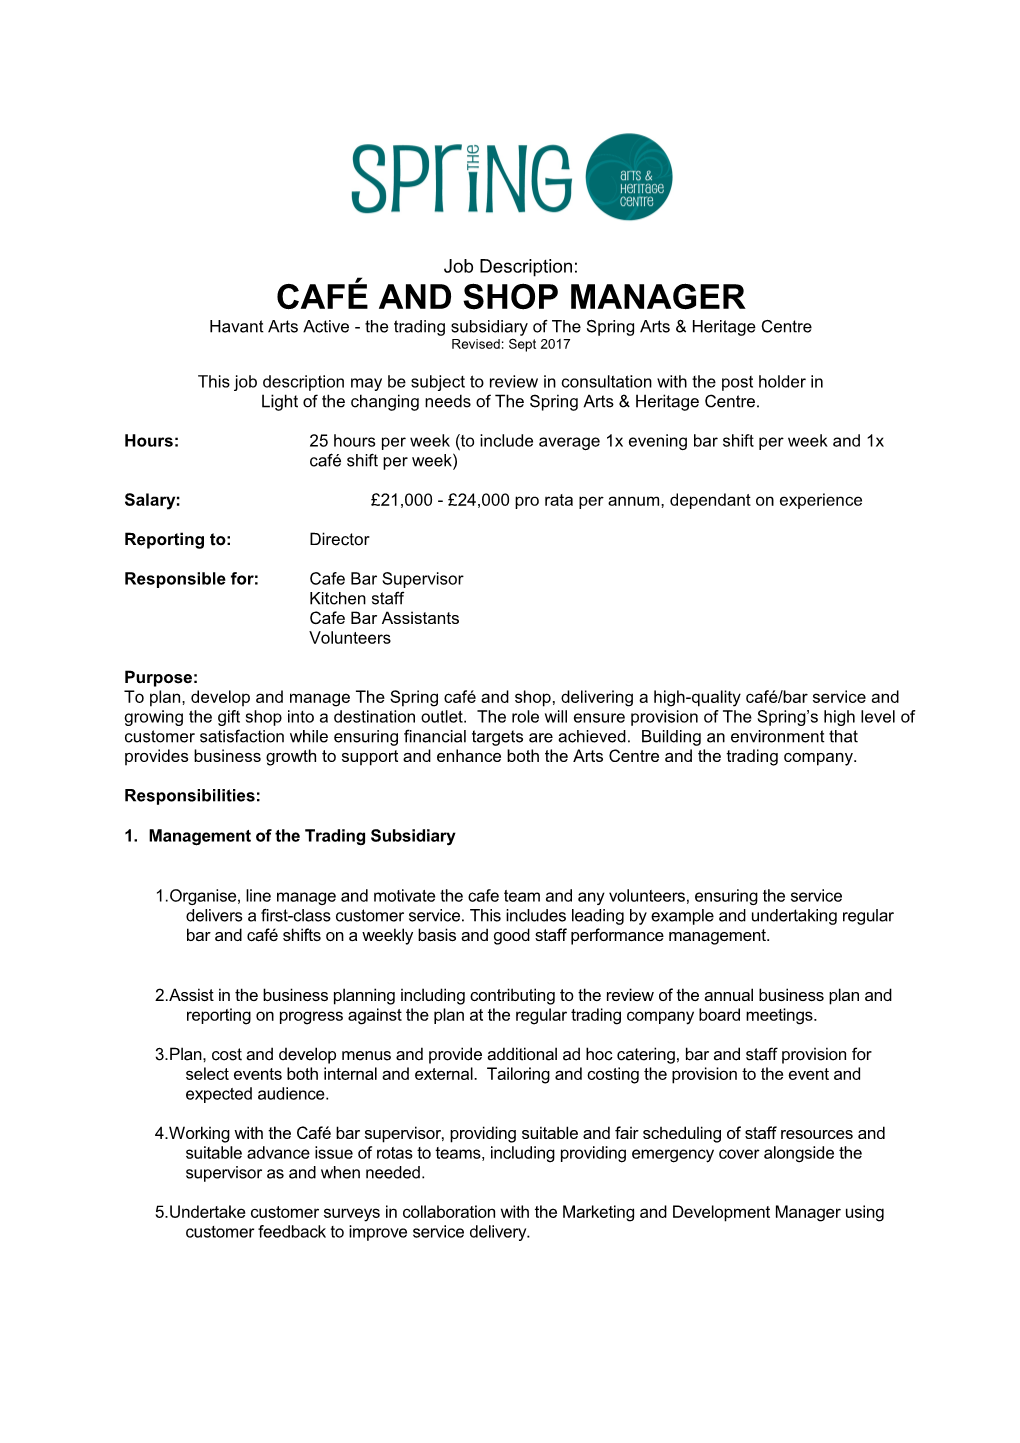 Draft Job Description for Hospitalities Manager